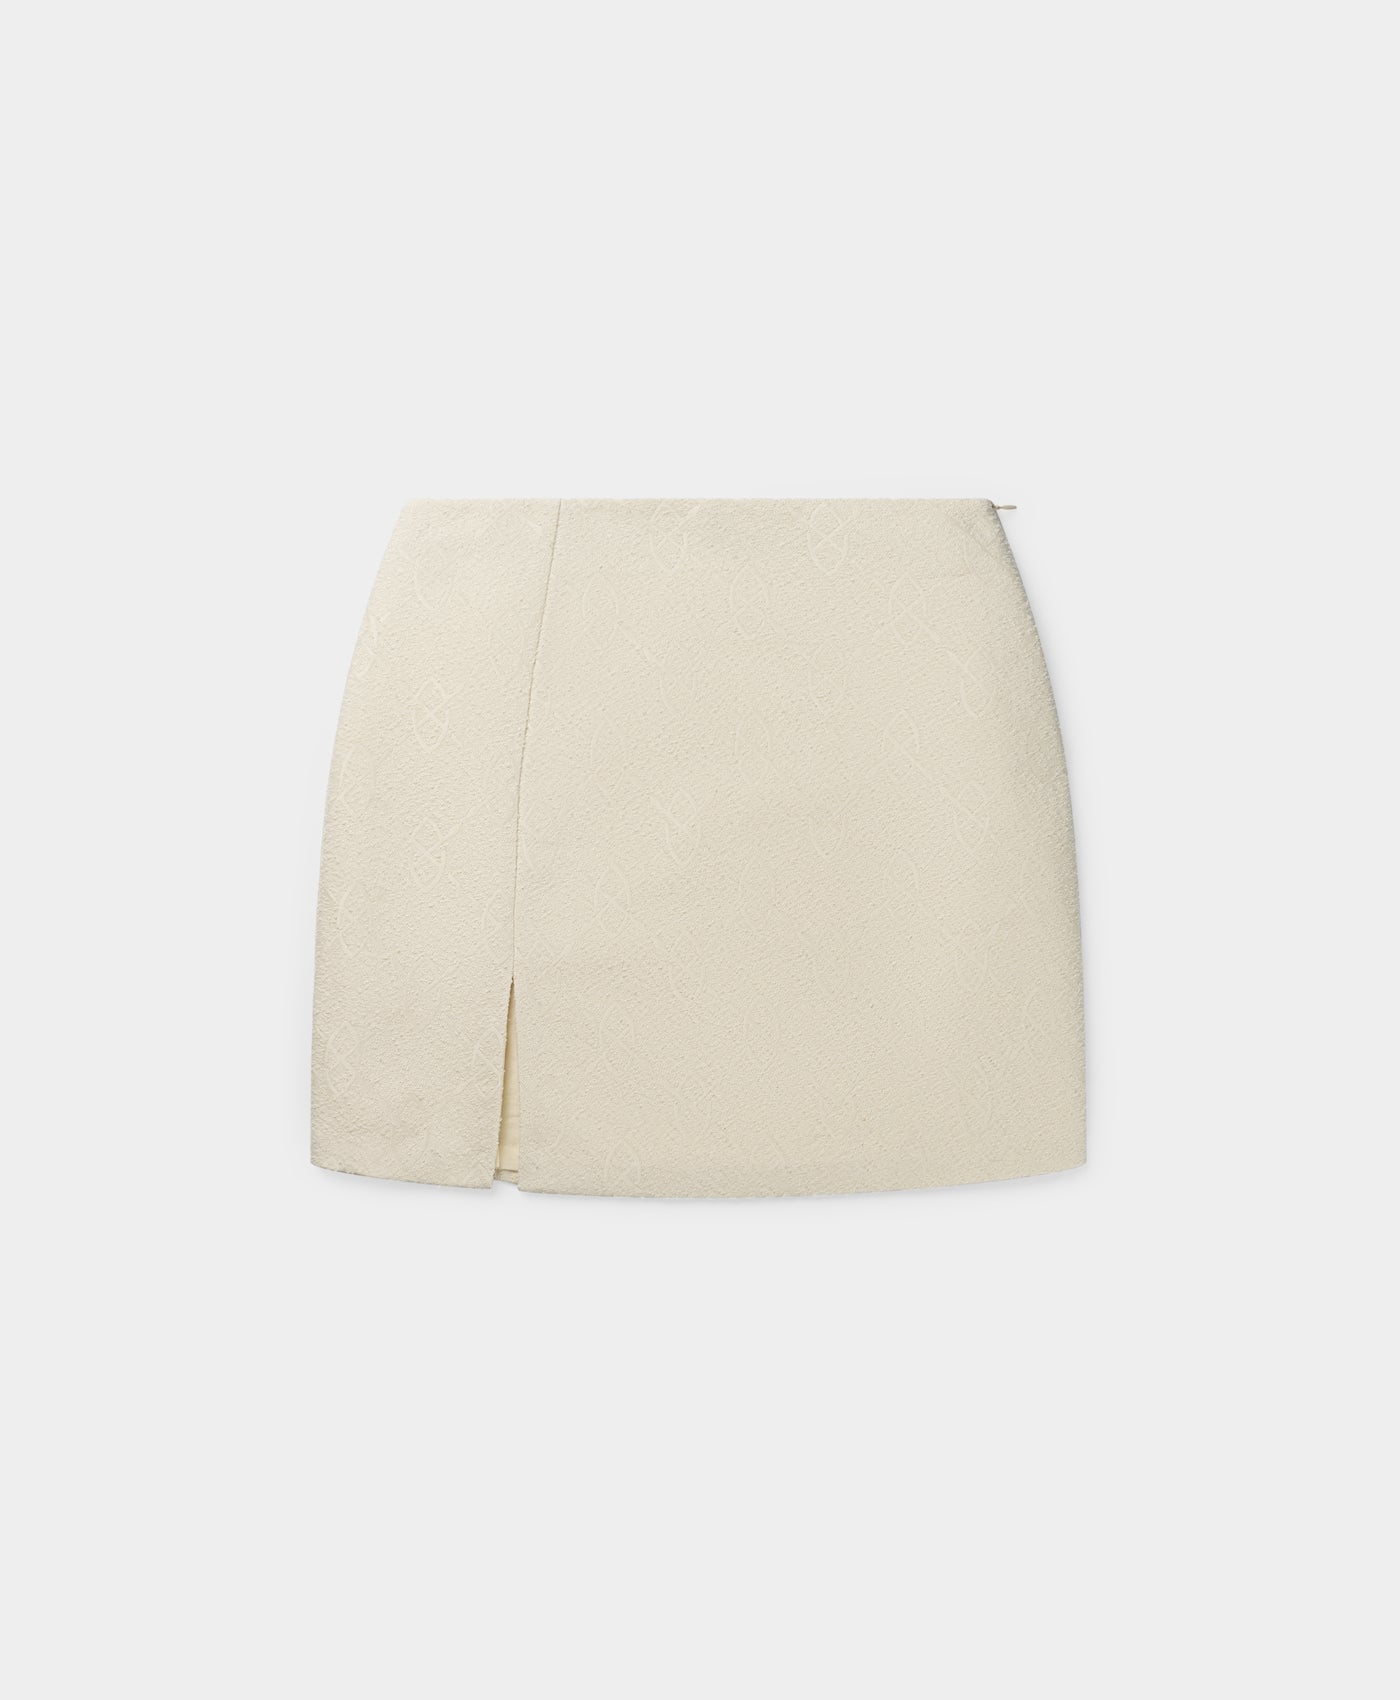 DP - Off White Kaya Shield Boucle Skirt - Packshot - Front 